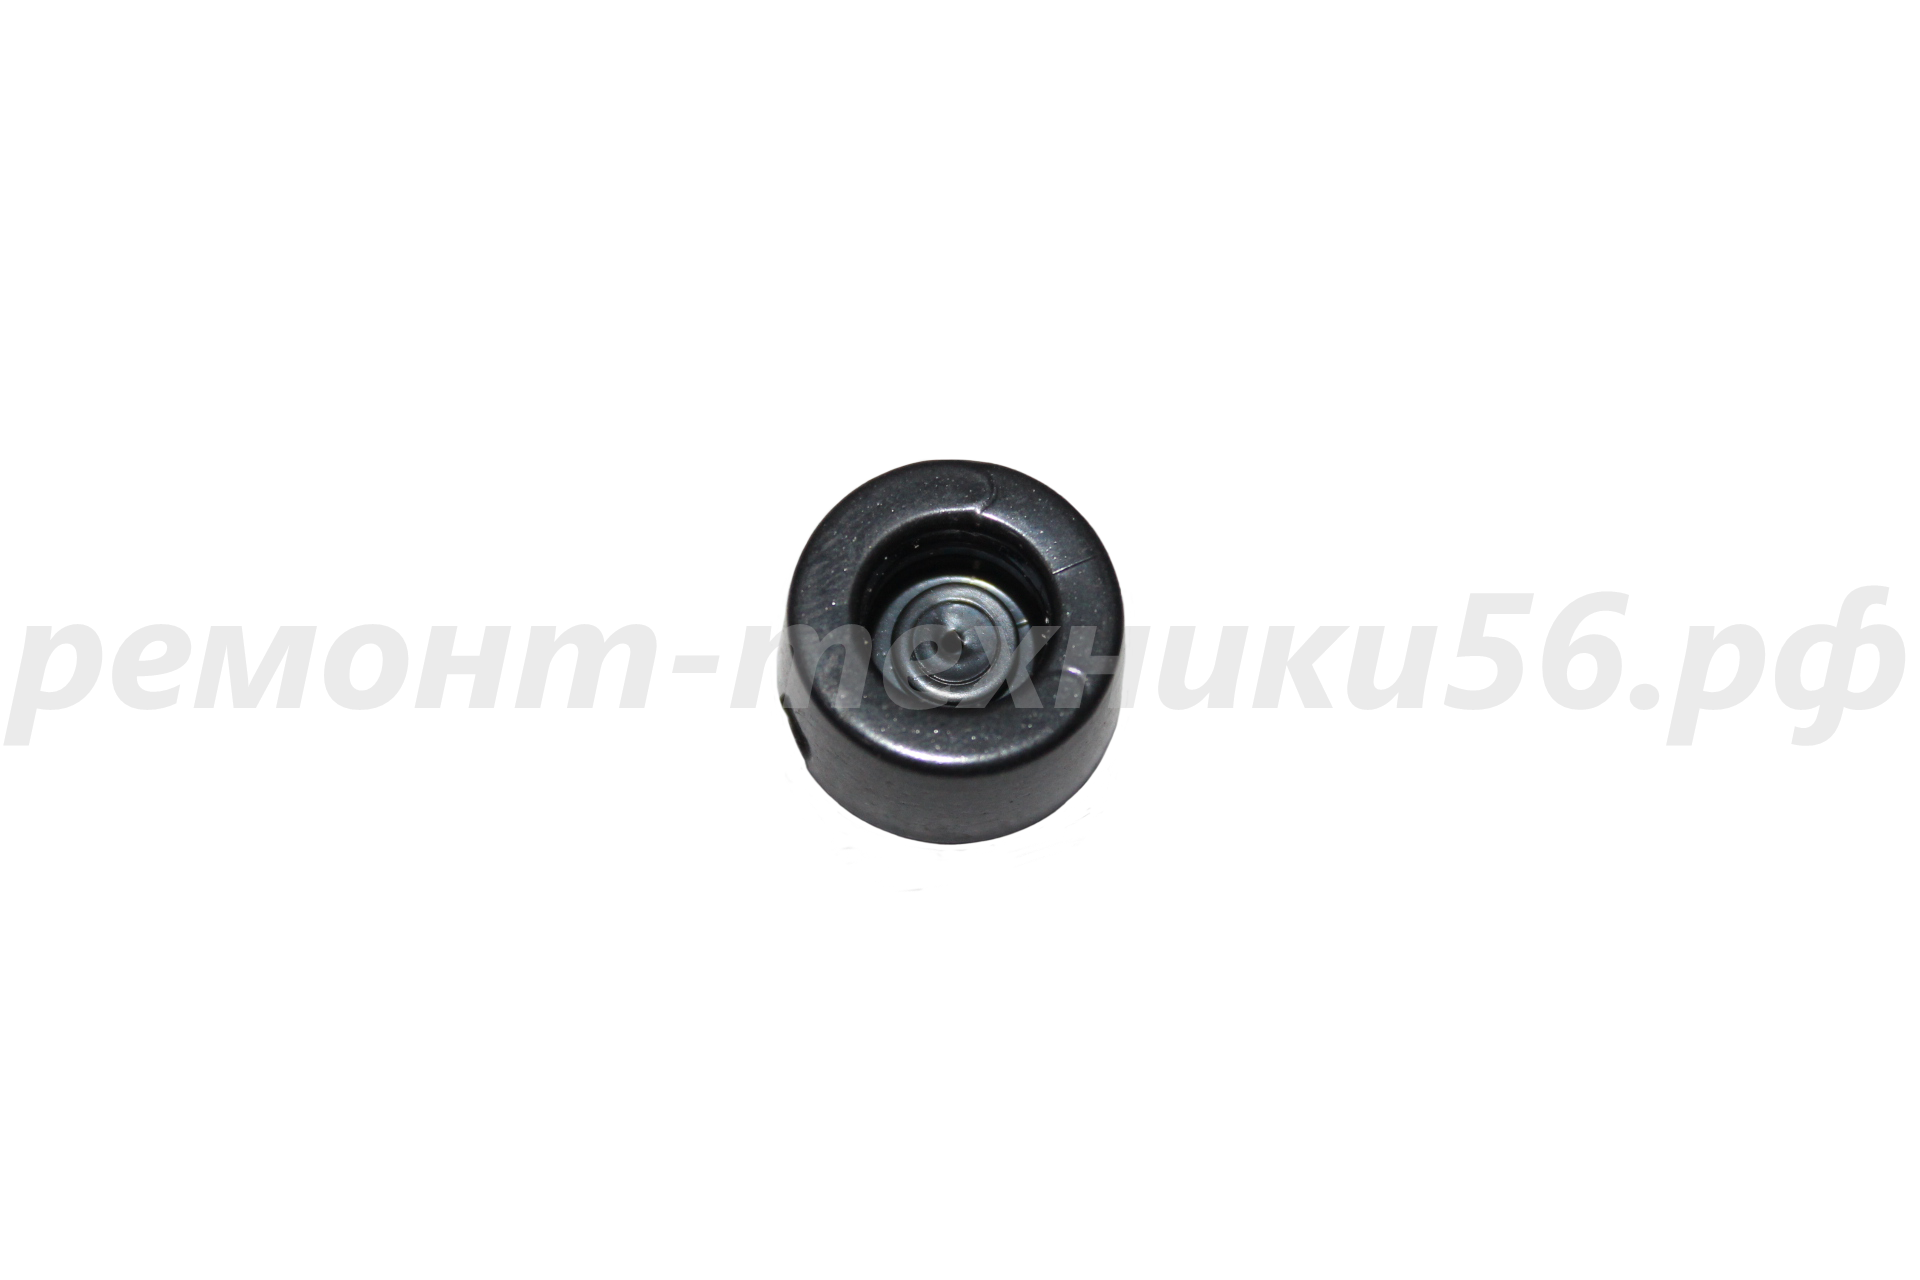 Втулка ЮМГИ 713 143 005 для мясорубки M12 Аксион - широкий ассортимент фото3